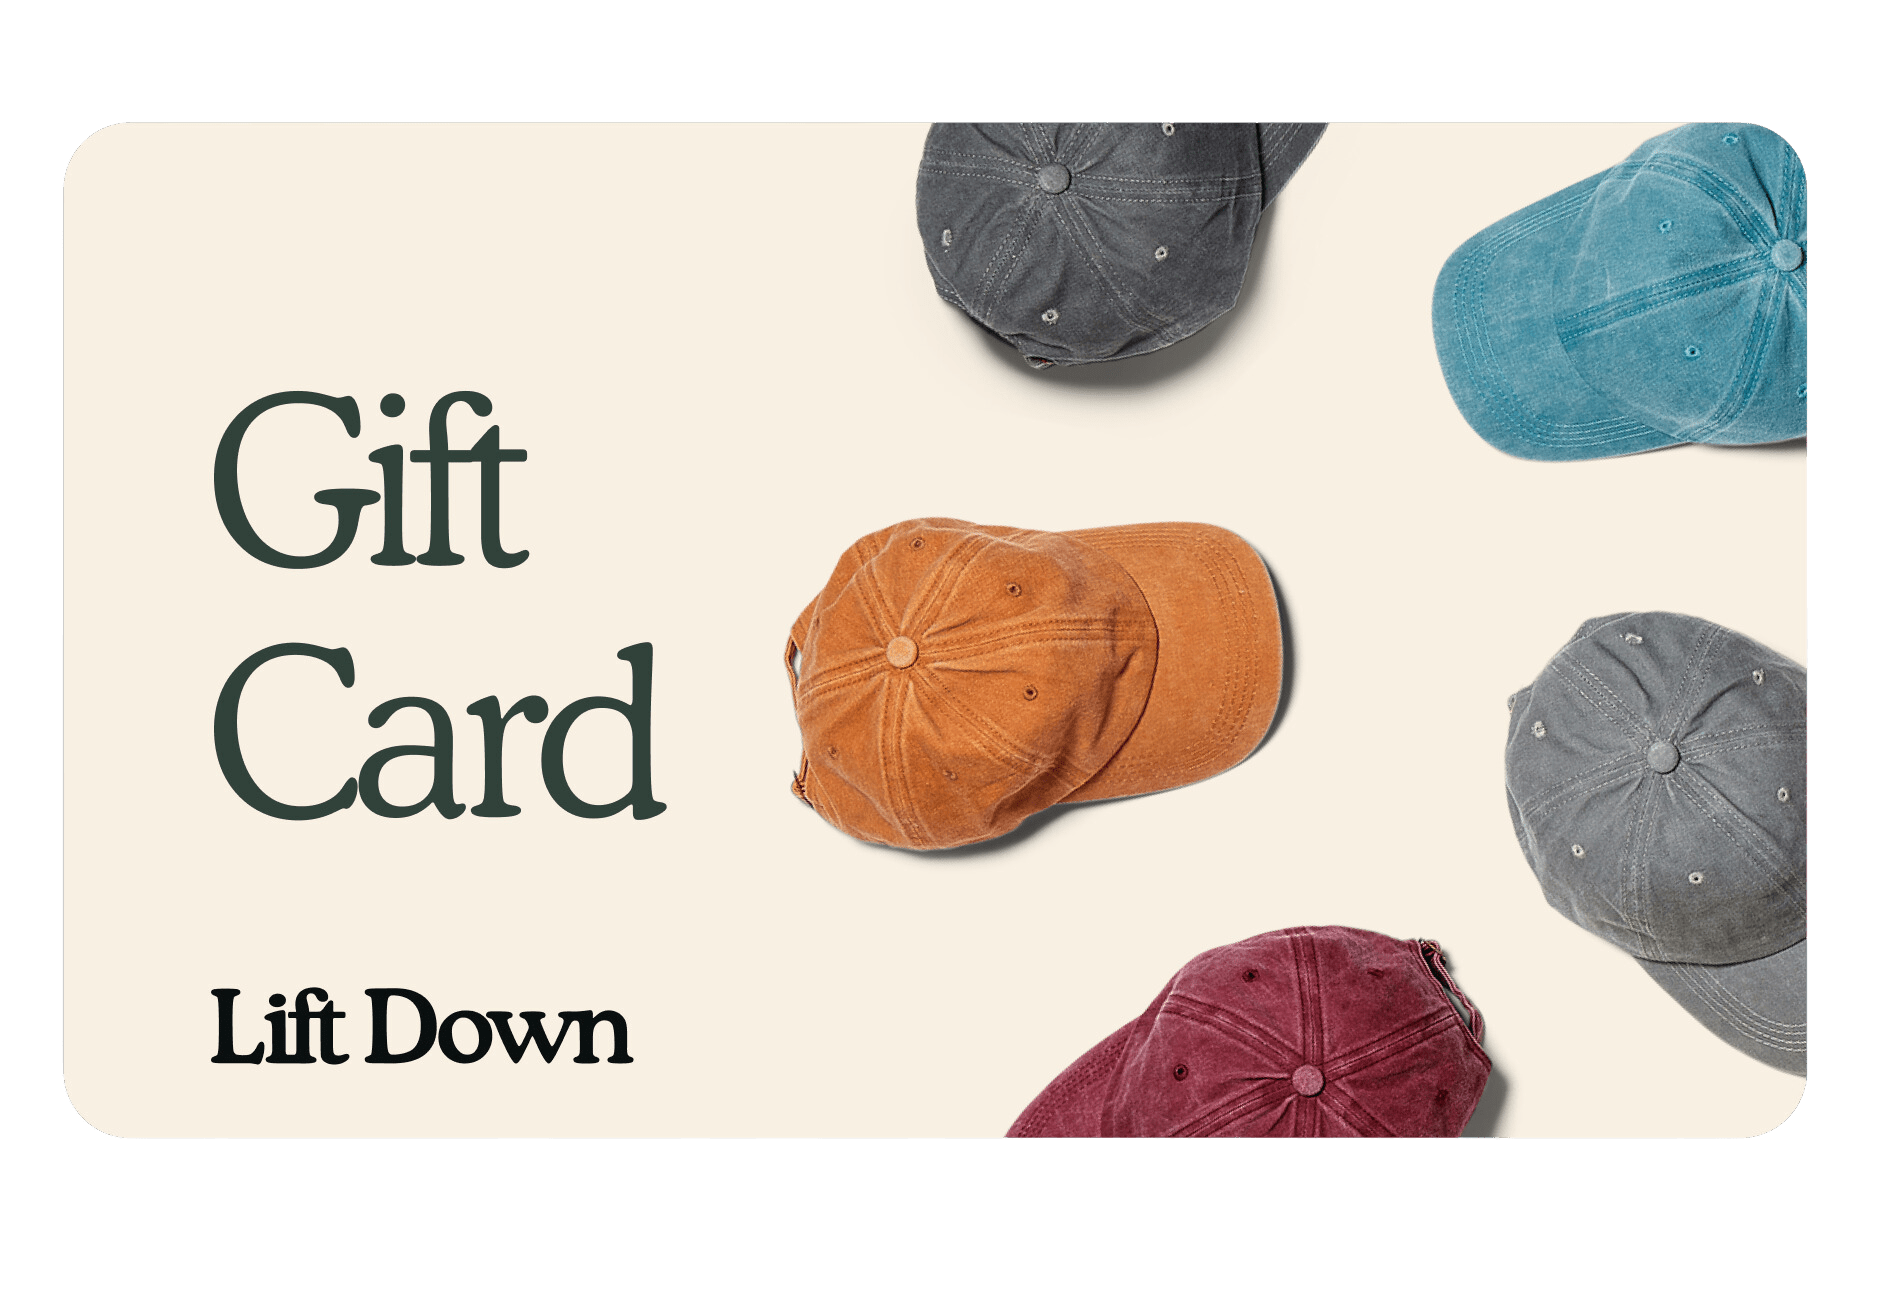 Lift Down Gift Card - $10.00 - Lift Down